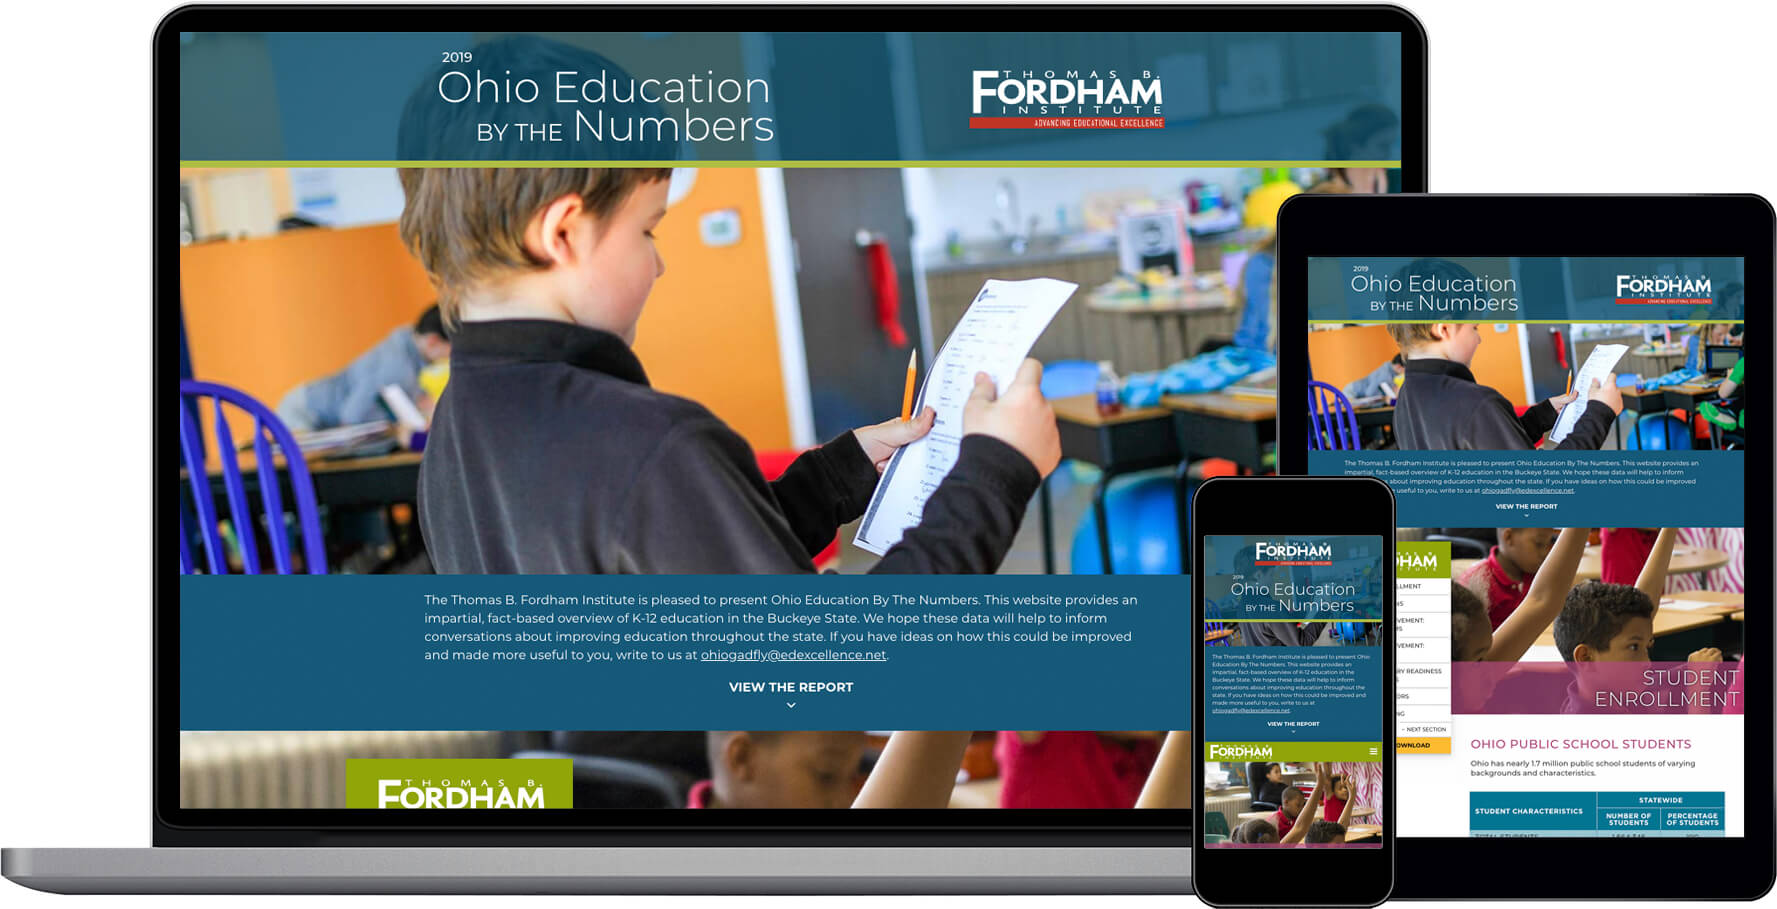 Thomas B Fordham Institute Ohio by the Numbers Responsive Website Design